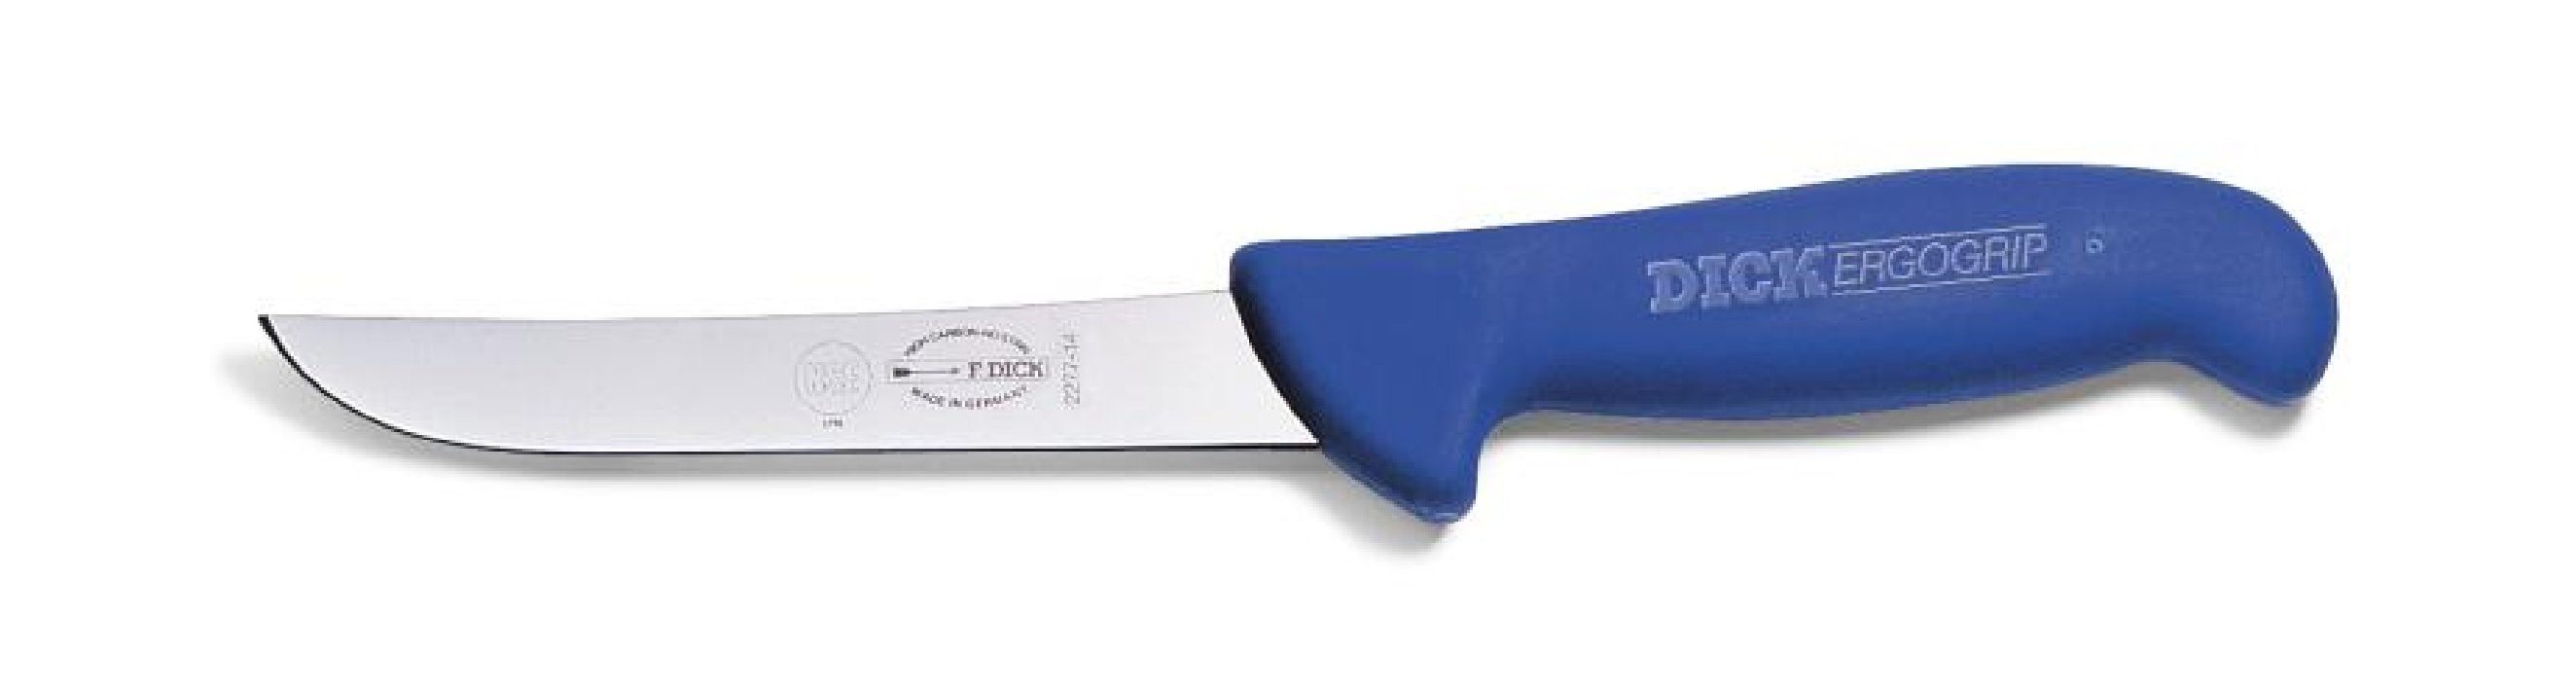 Klinge Ausbeinmesser Messer Ausbeinmesser Ausbeinmesser cm Dick ErgoGrip 14 Dick 8227714